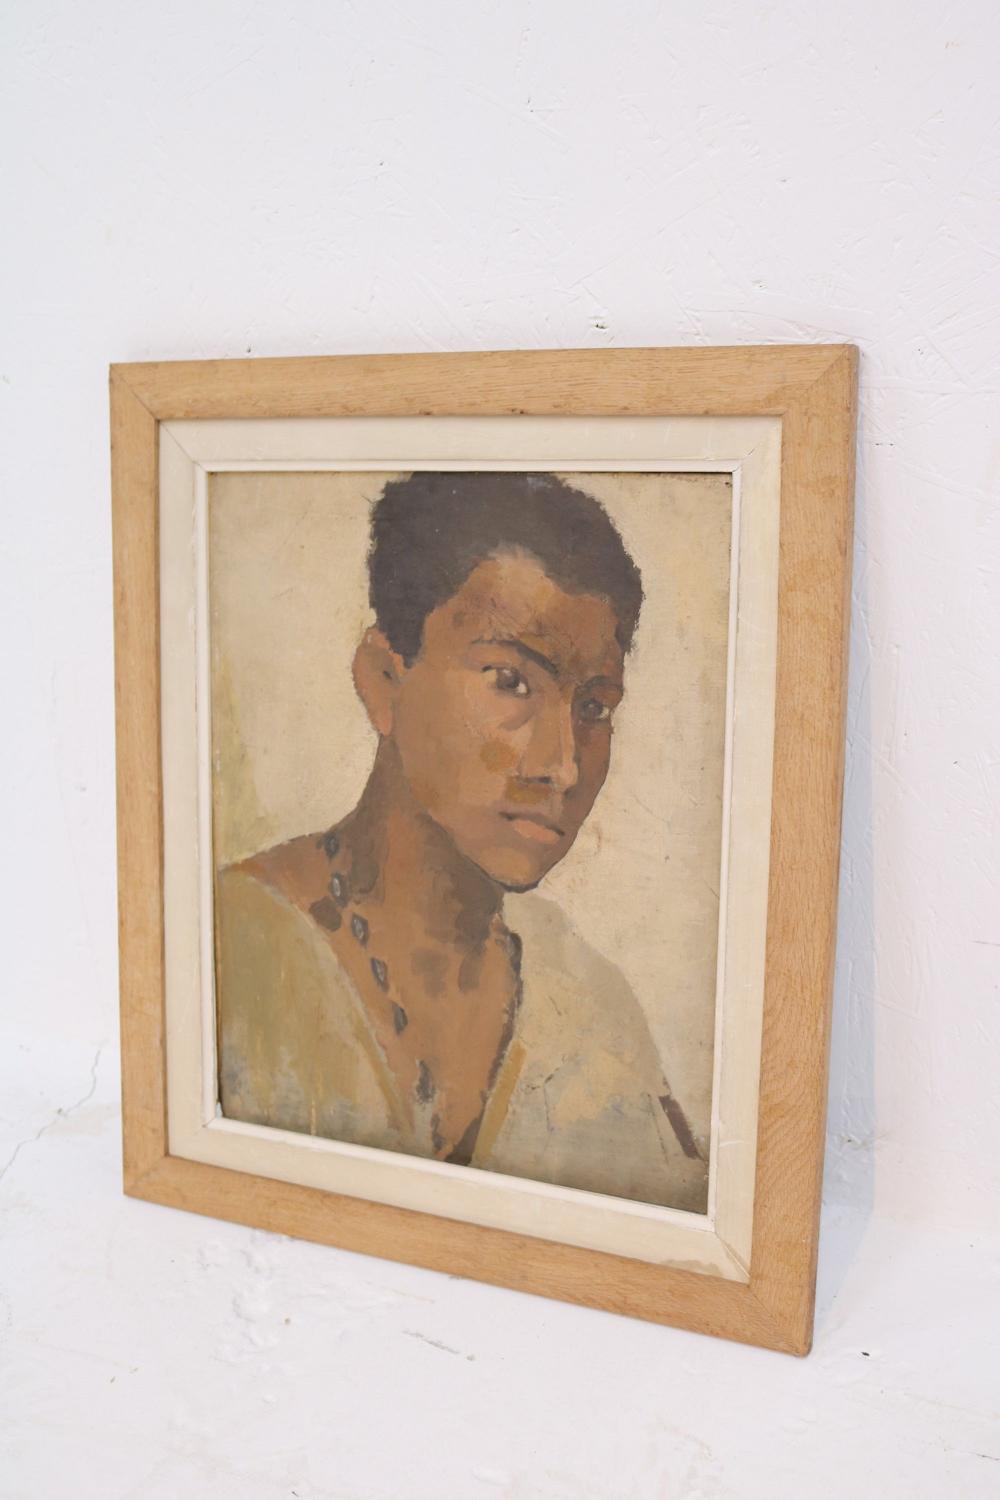 A 20th century oil on canvas portrait